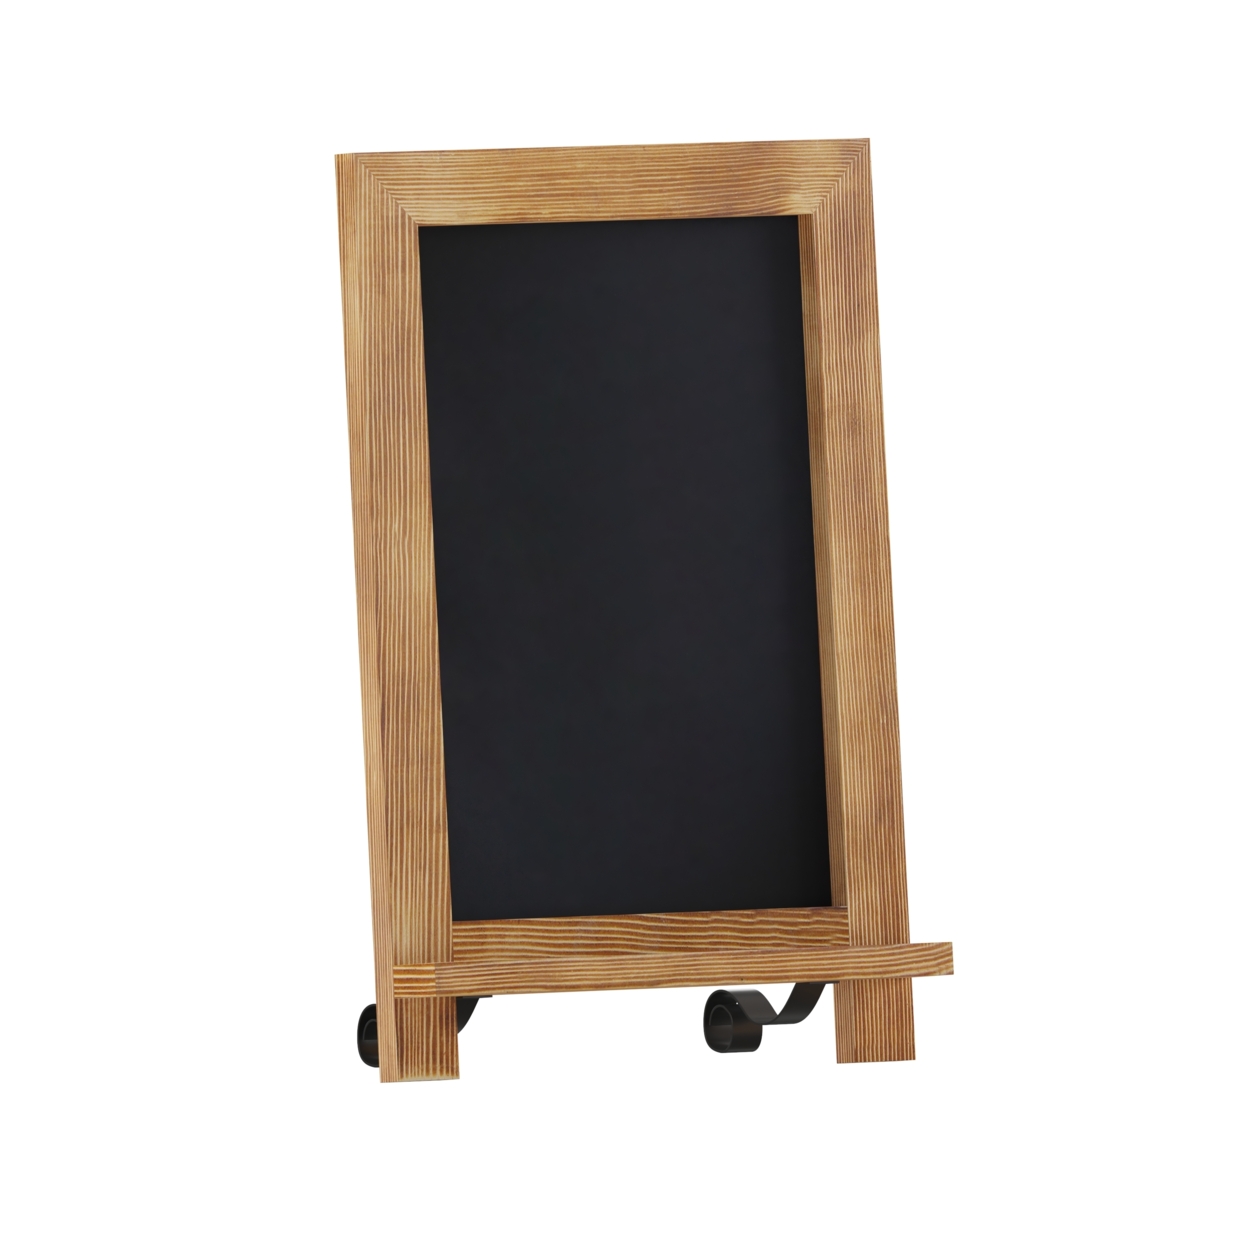 Magnetic Chalkboard, Walnut Brown Wood Frame, Metal Scrolled Legs